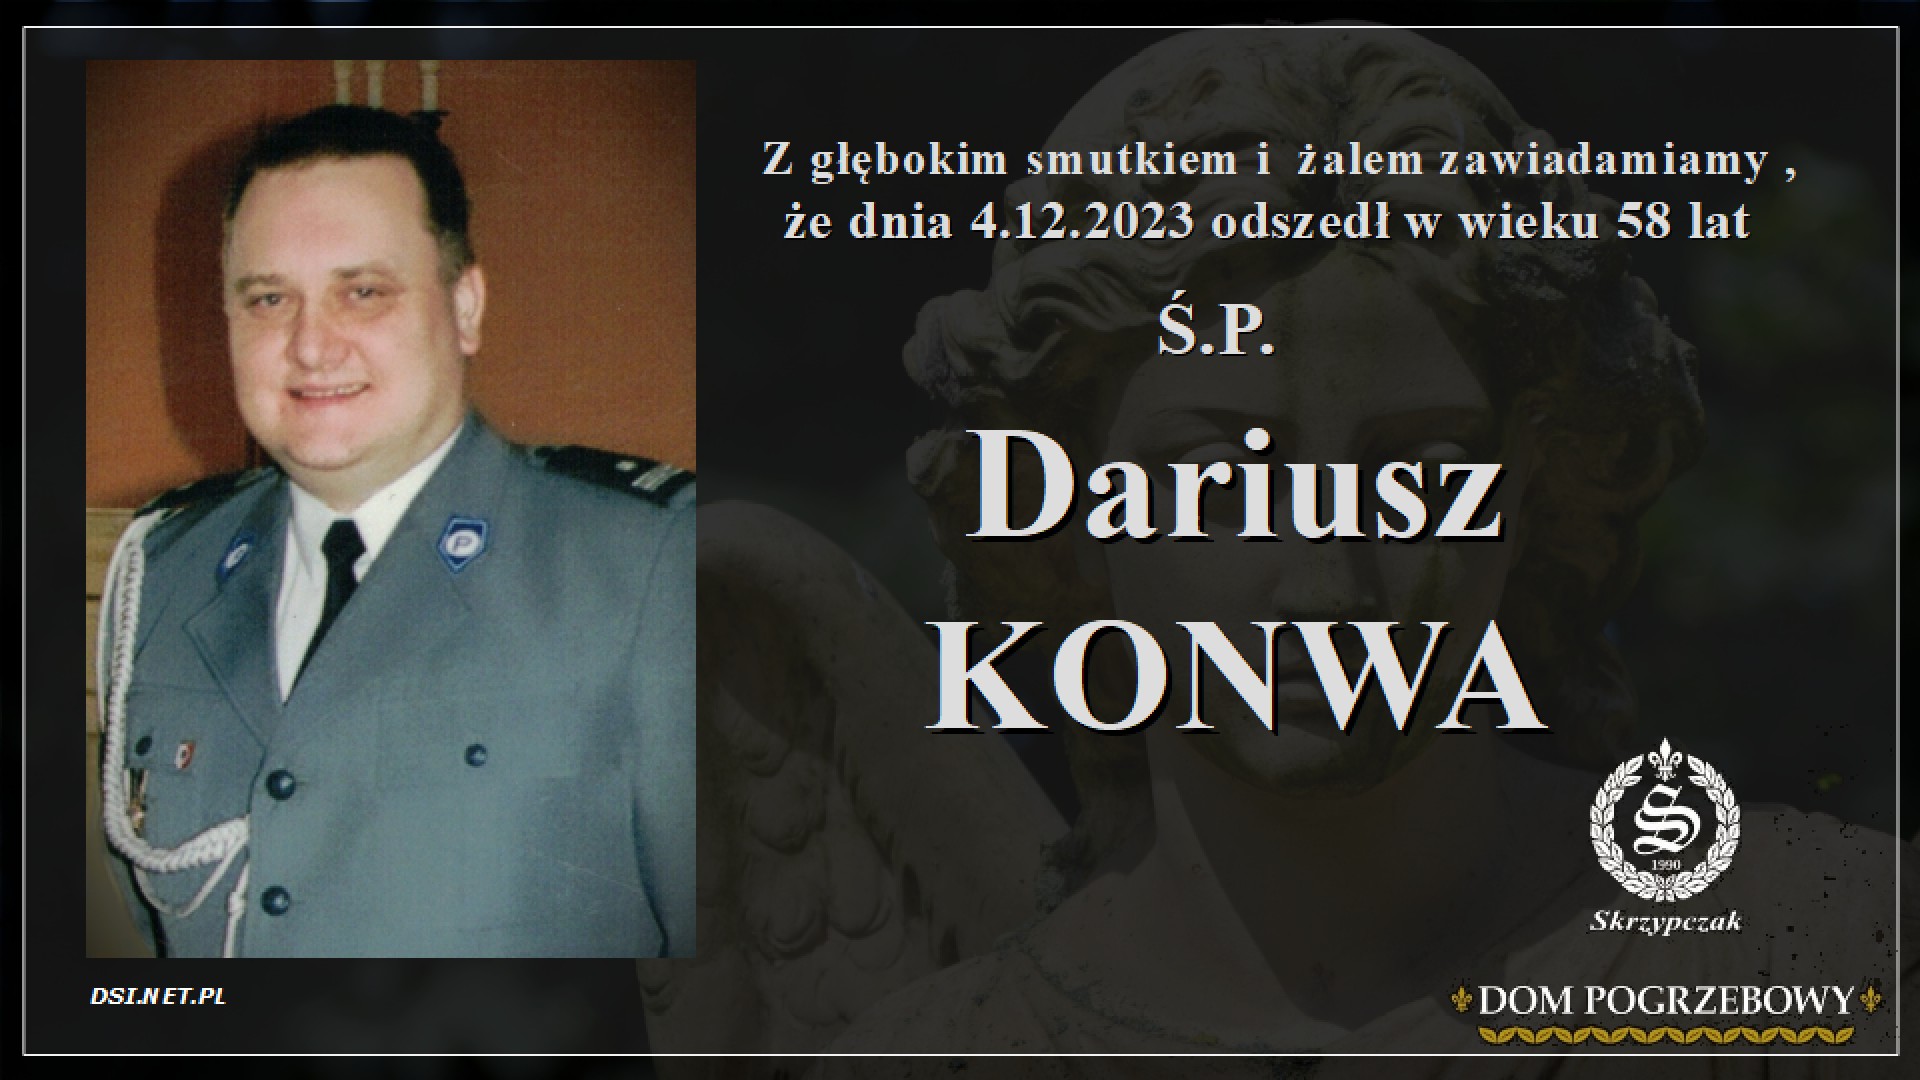 Ś.P. Dariusz Konwa